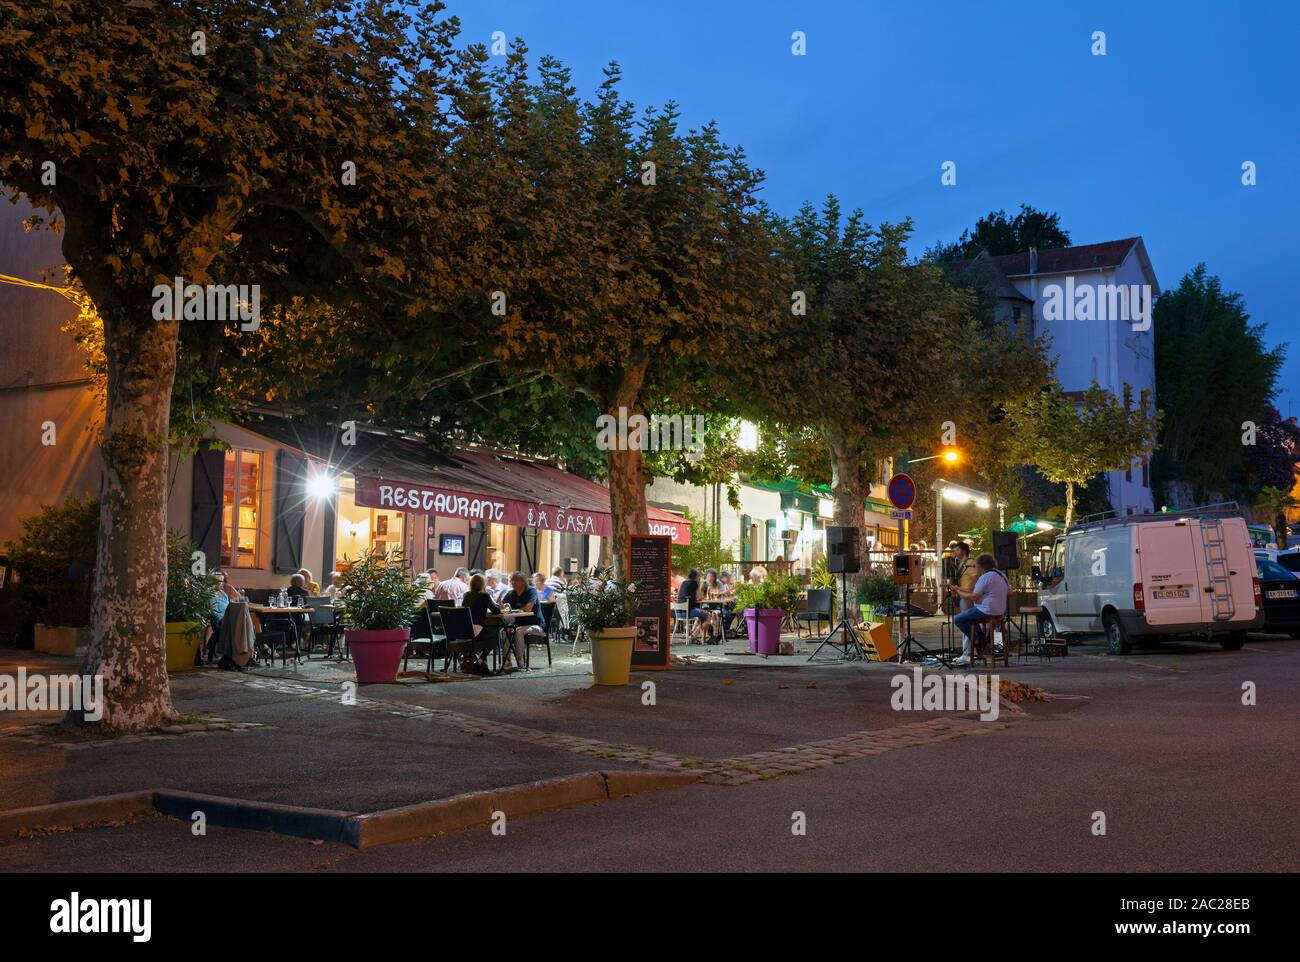 Europe, France, Nouvelle-Aquitaine, Orthez, Restaurant La Casa on Place du Foirail at night with live music Stock Photo